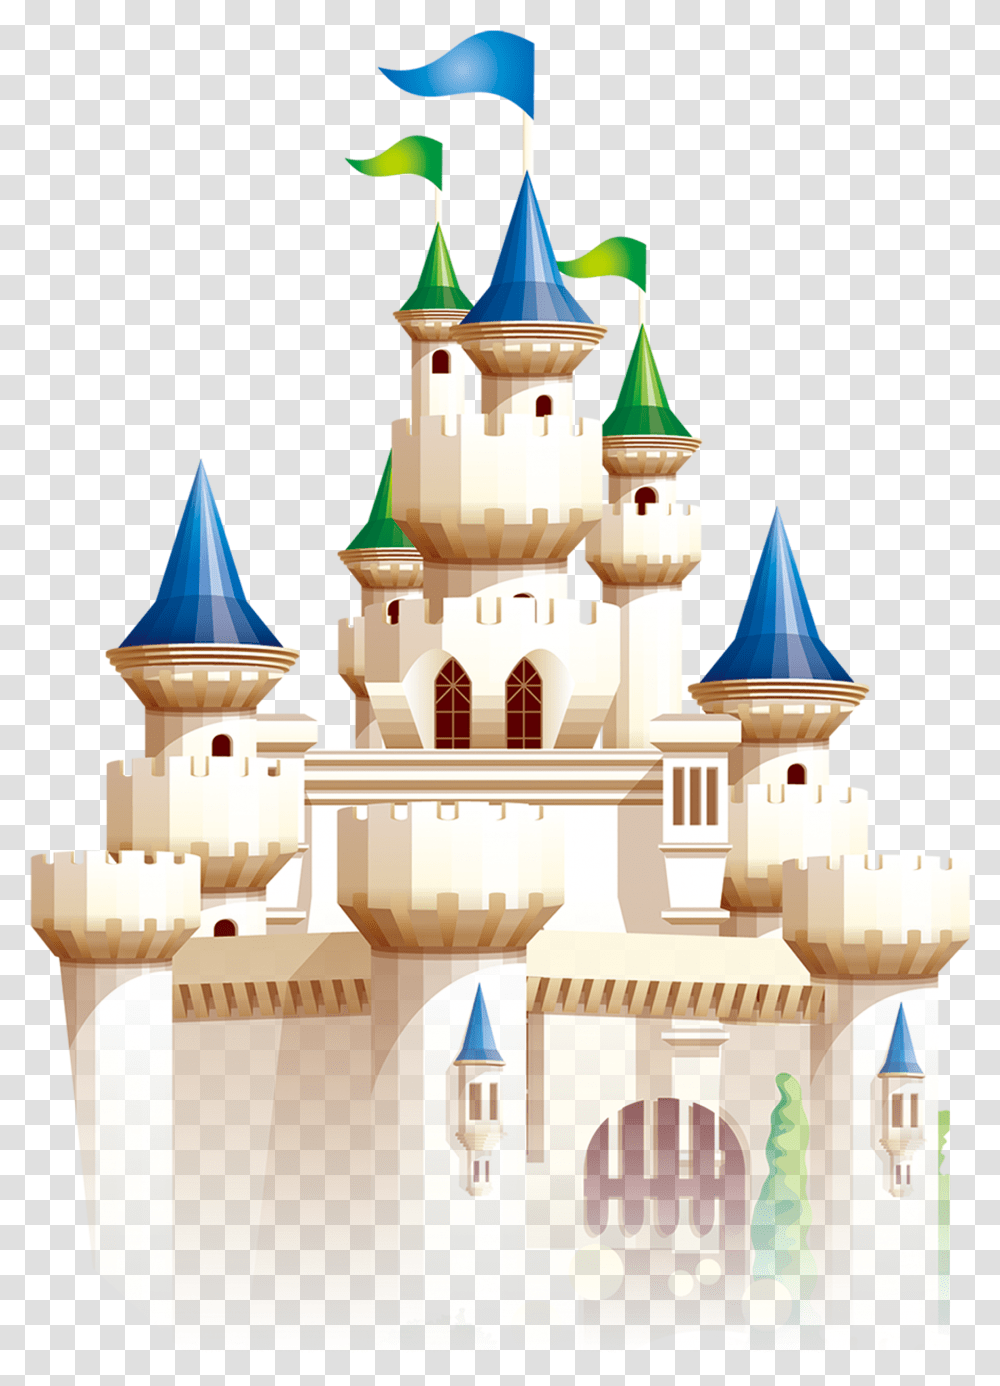 Cartoon Fantasy Fairytale Castle Cartoon Castle, Architecture, Building, Spire, Tower Transparent Png